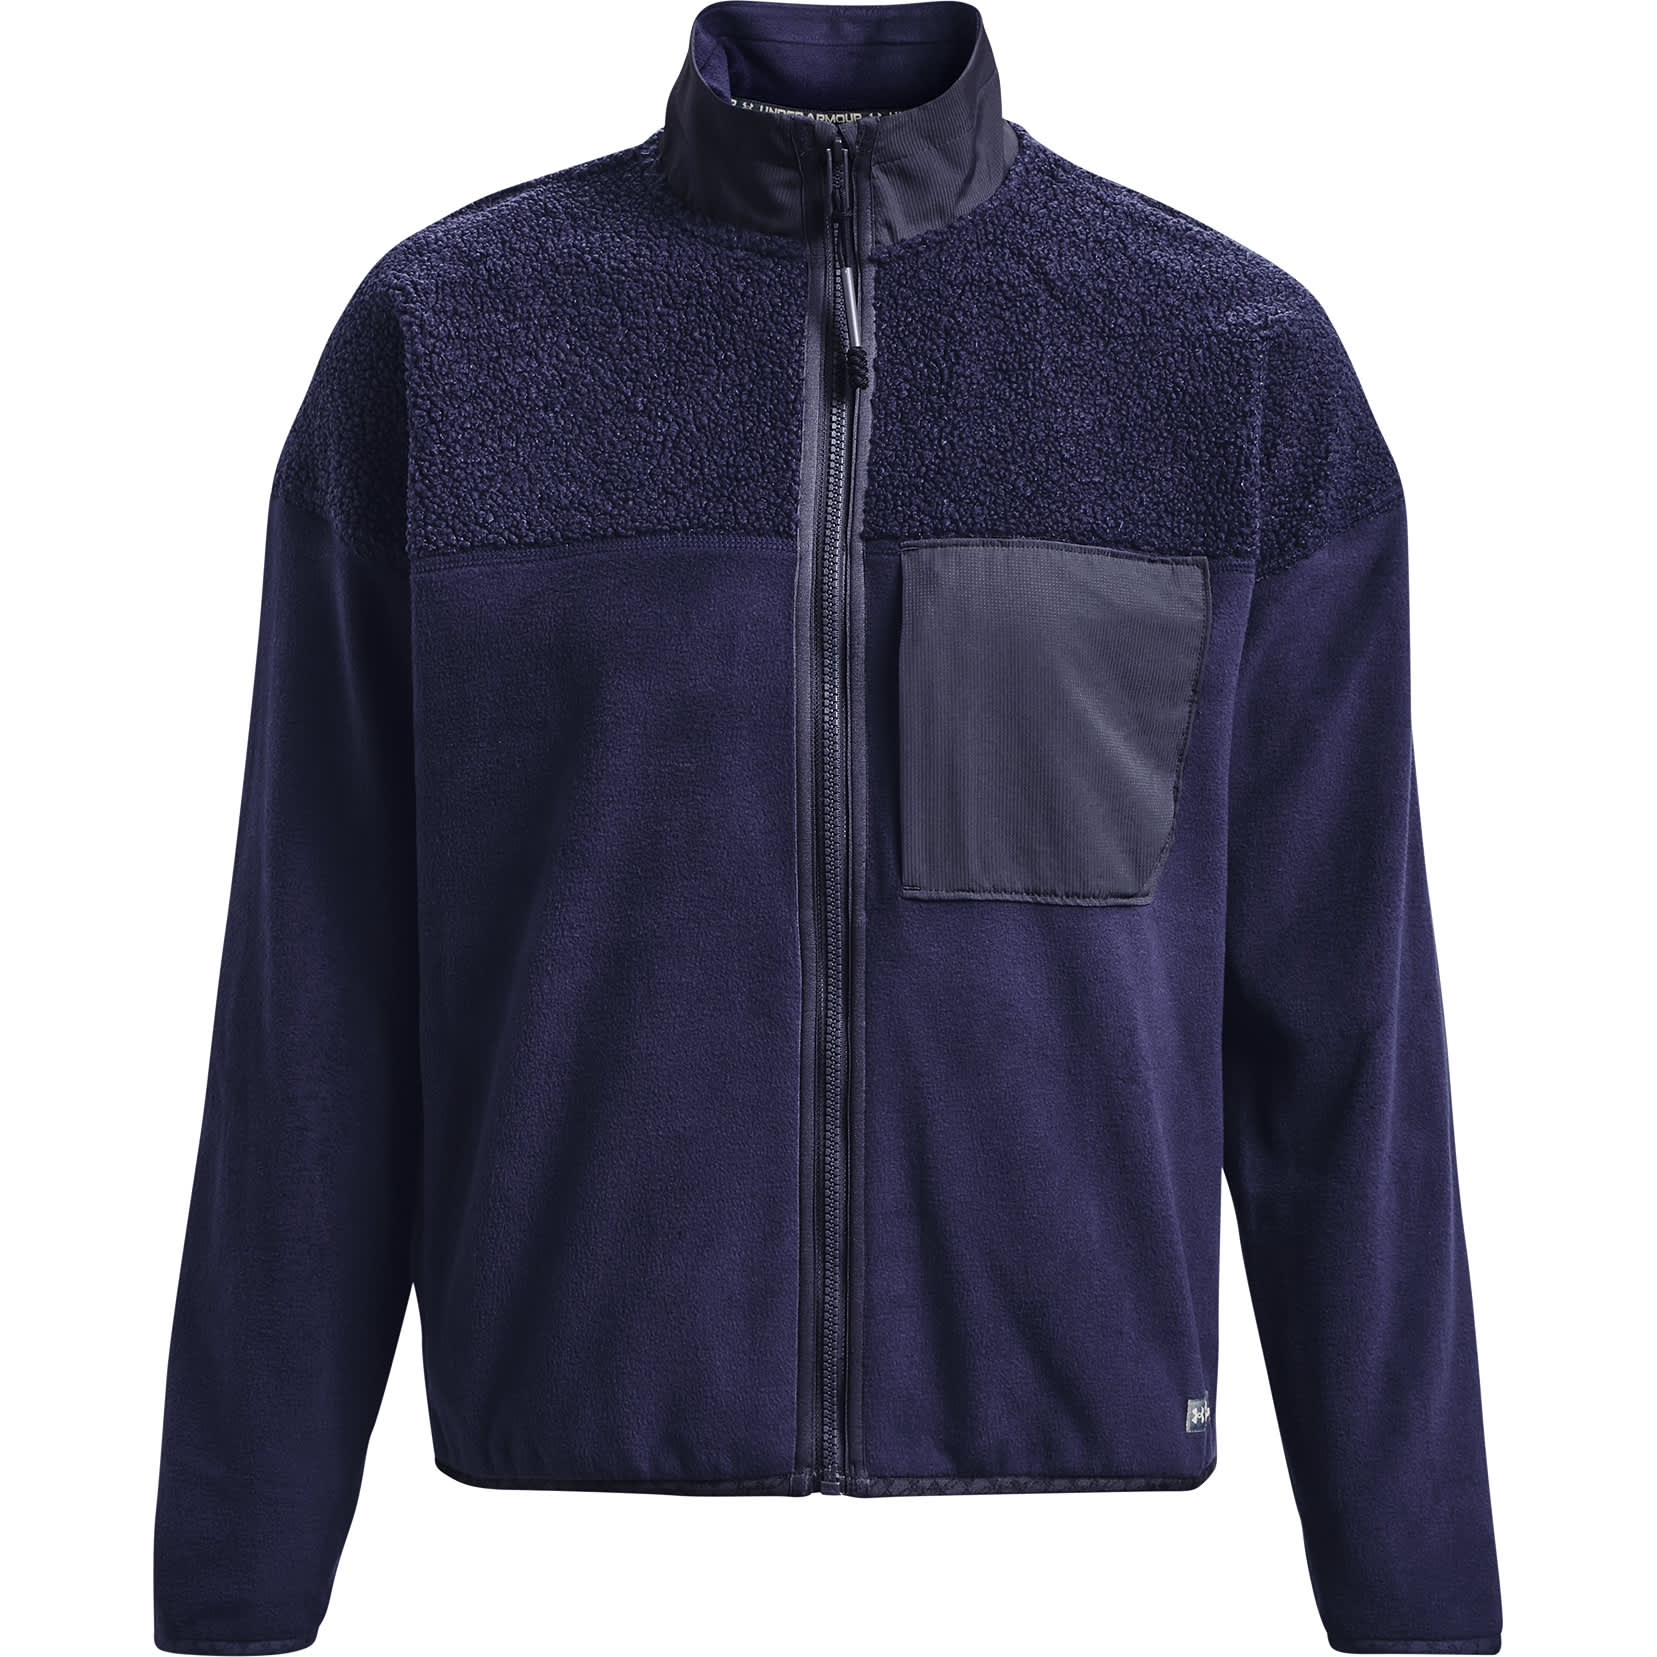 Under Armour® Women’s Polartec® Maxx Full-Zip Fleece Jacket